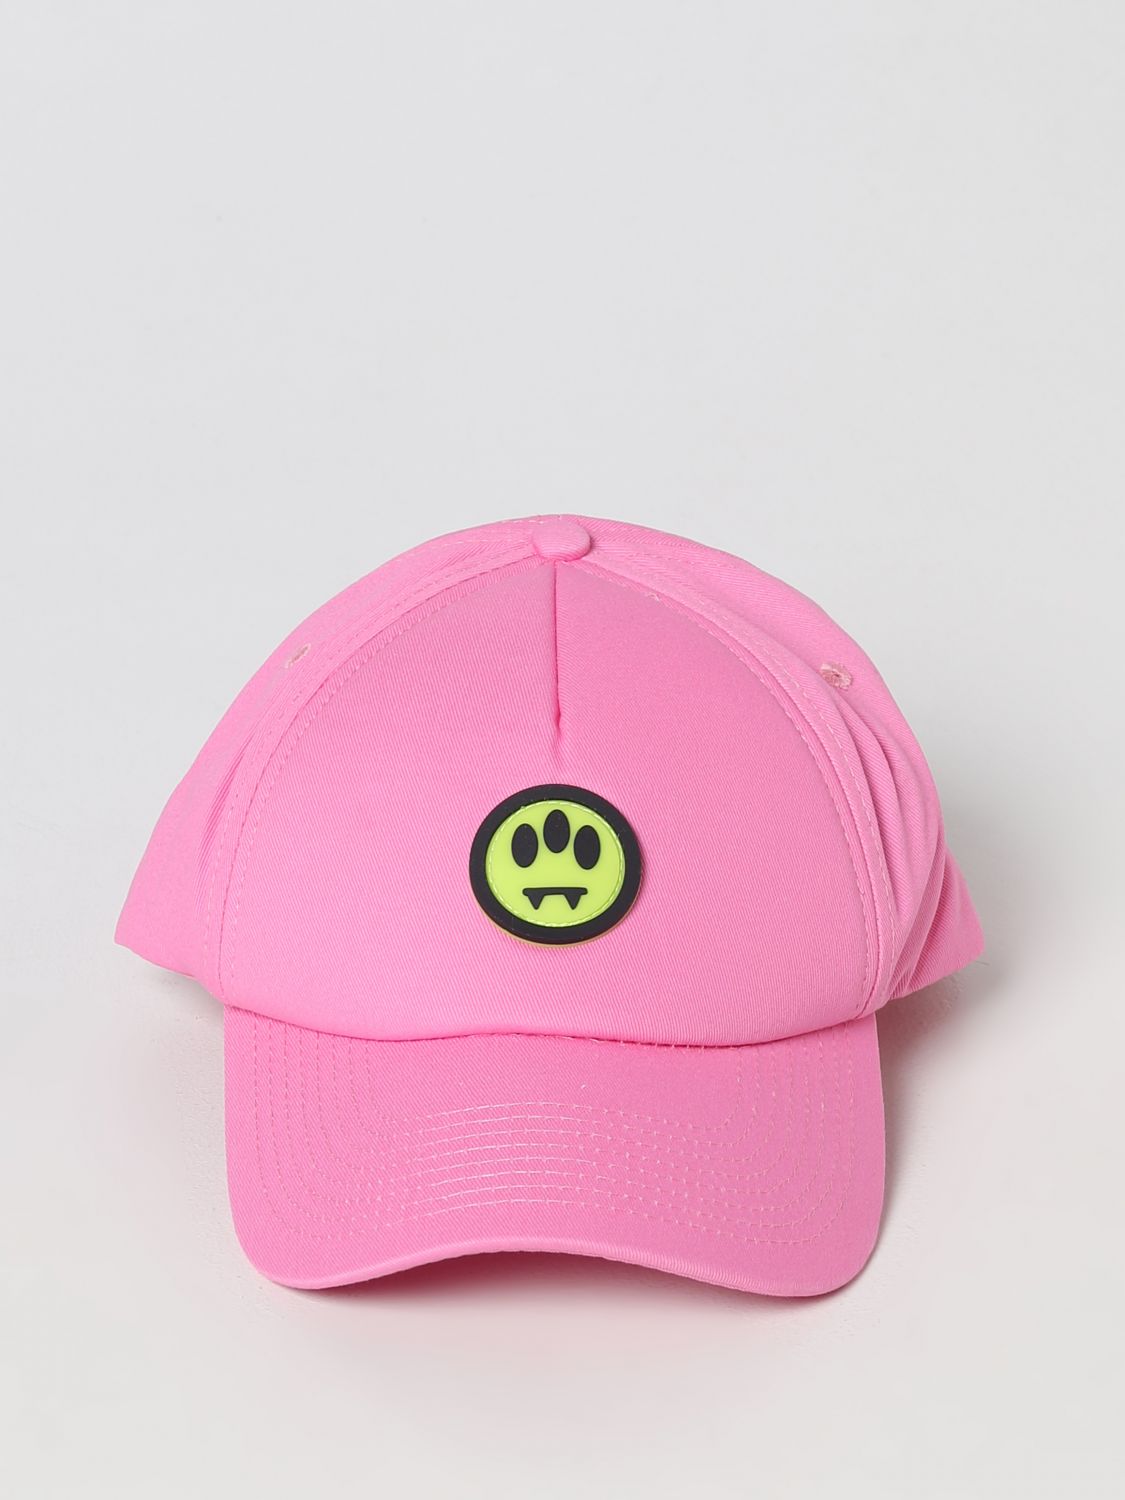 Hat Barrow: Barrow hat for men pink 2